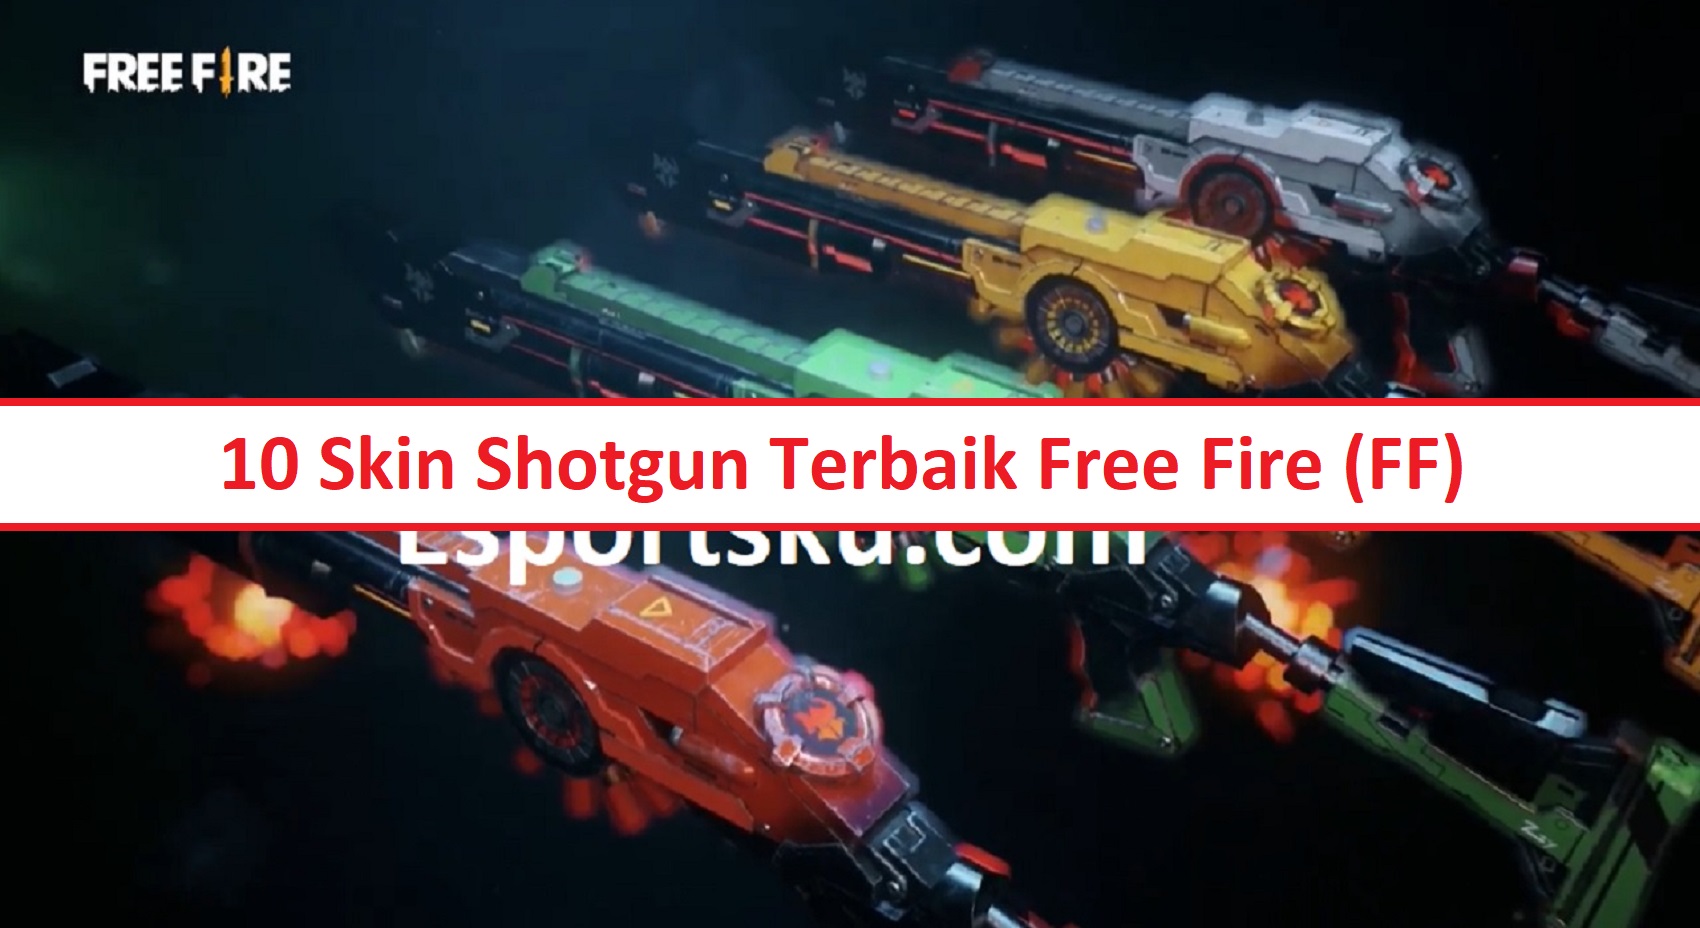 Skin Shotgun Terbaik Free Fire (FF)